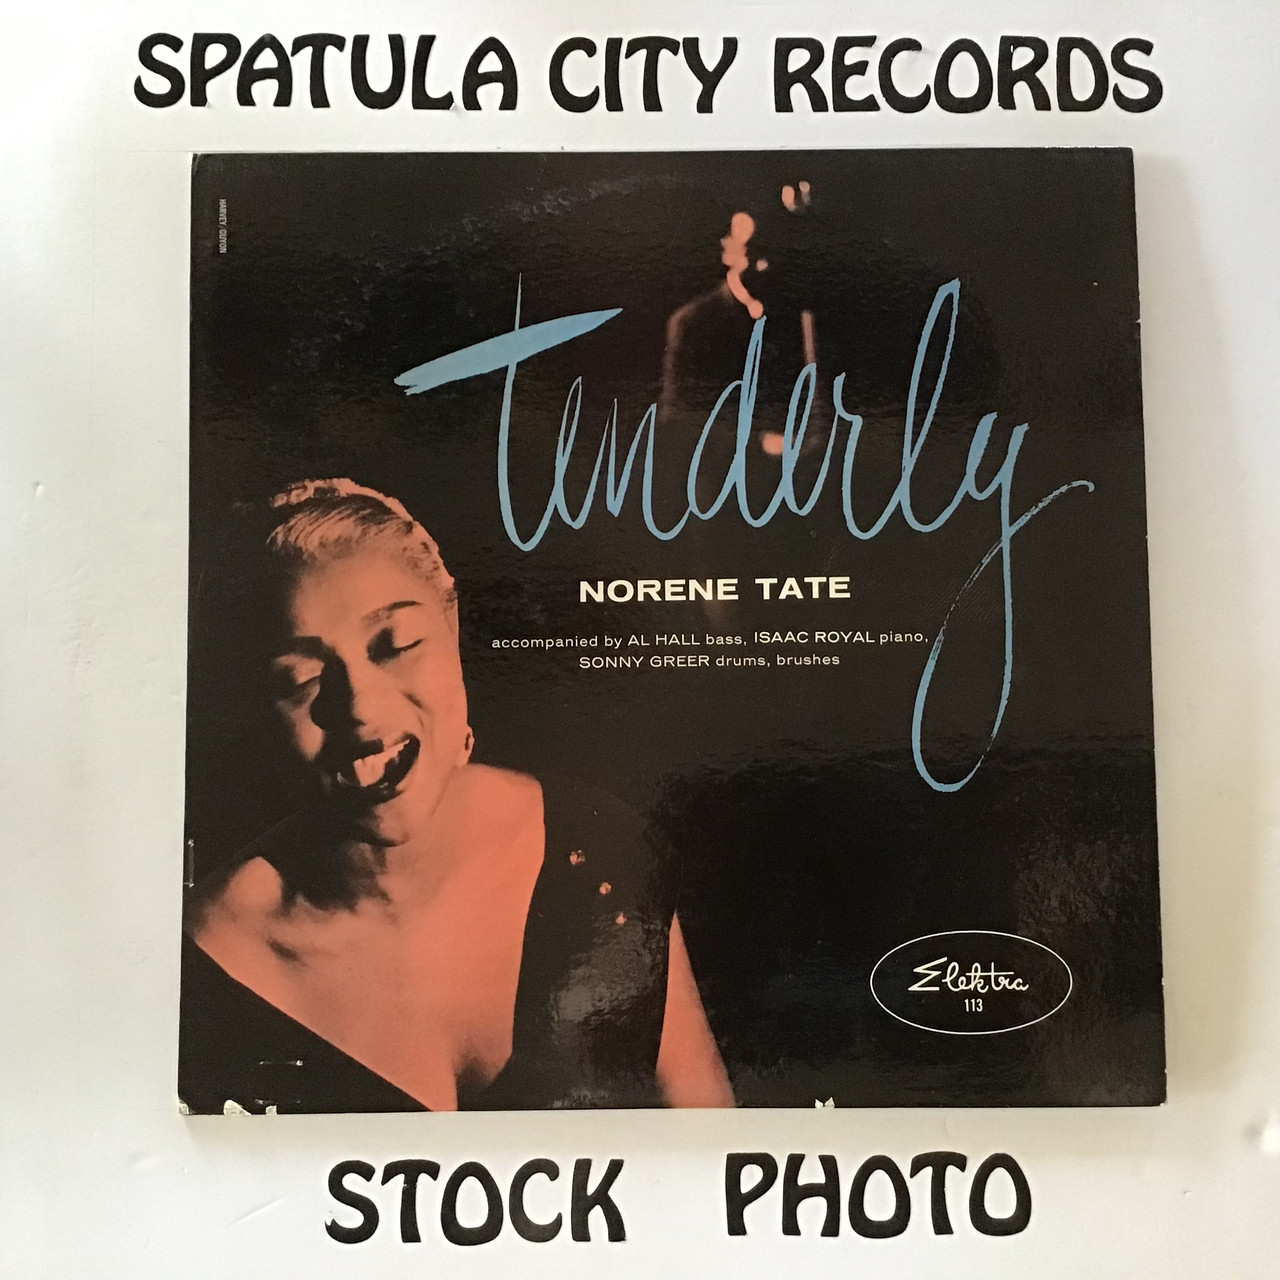 Norene Tate - Tenderly - MONO - vinyl record LP